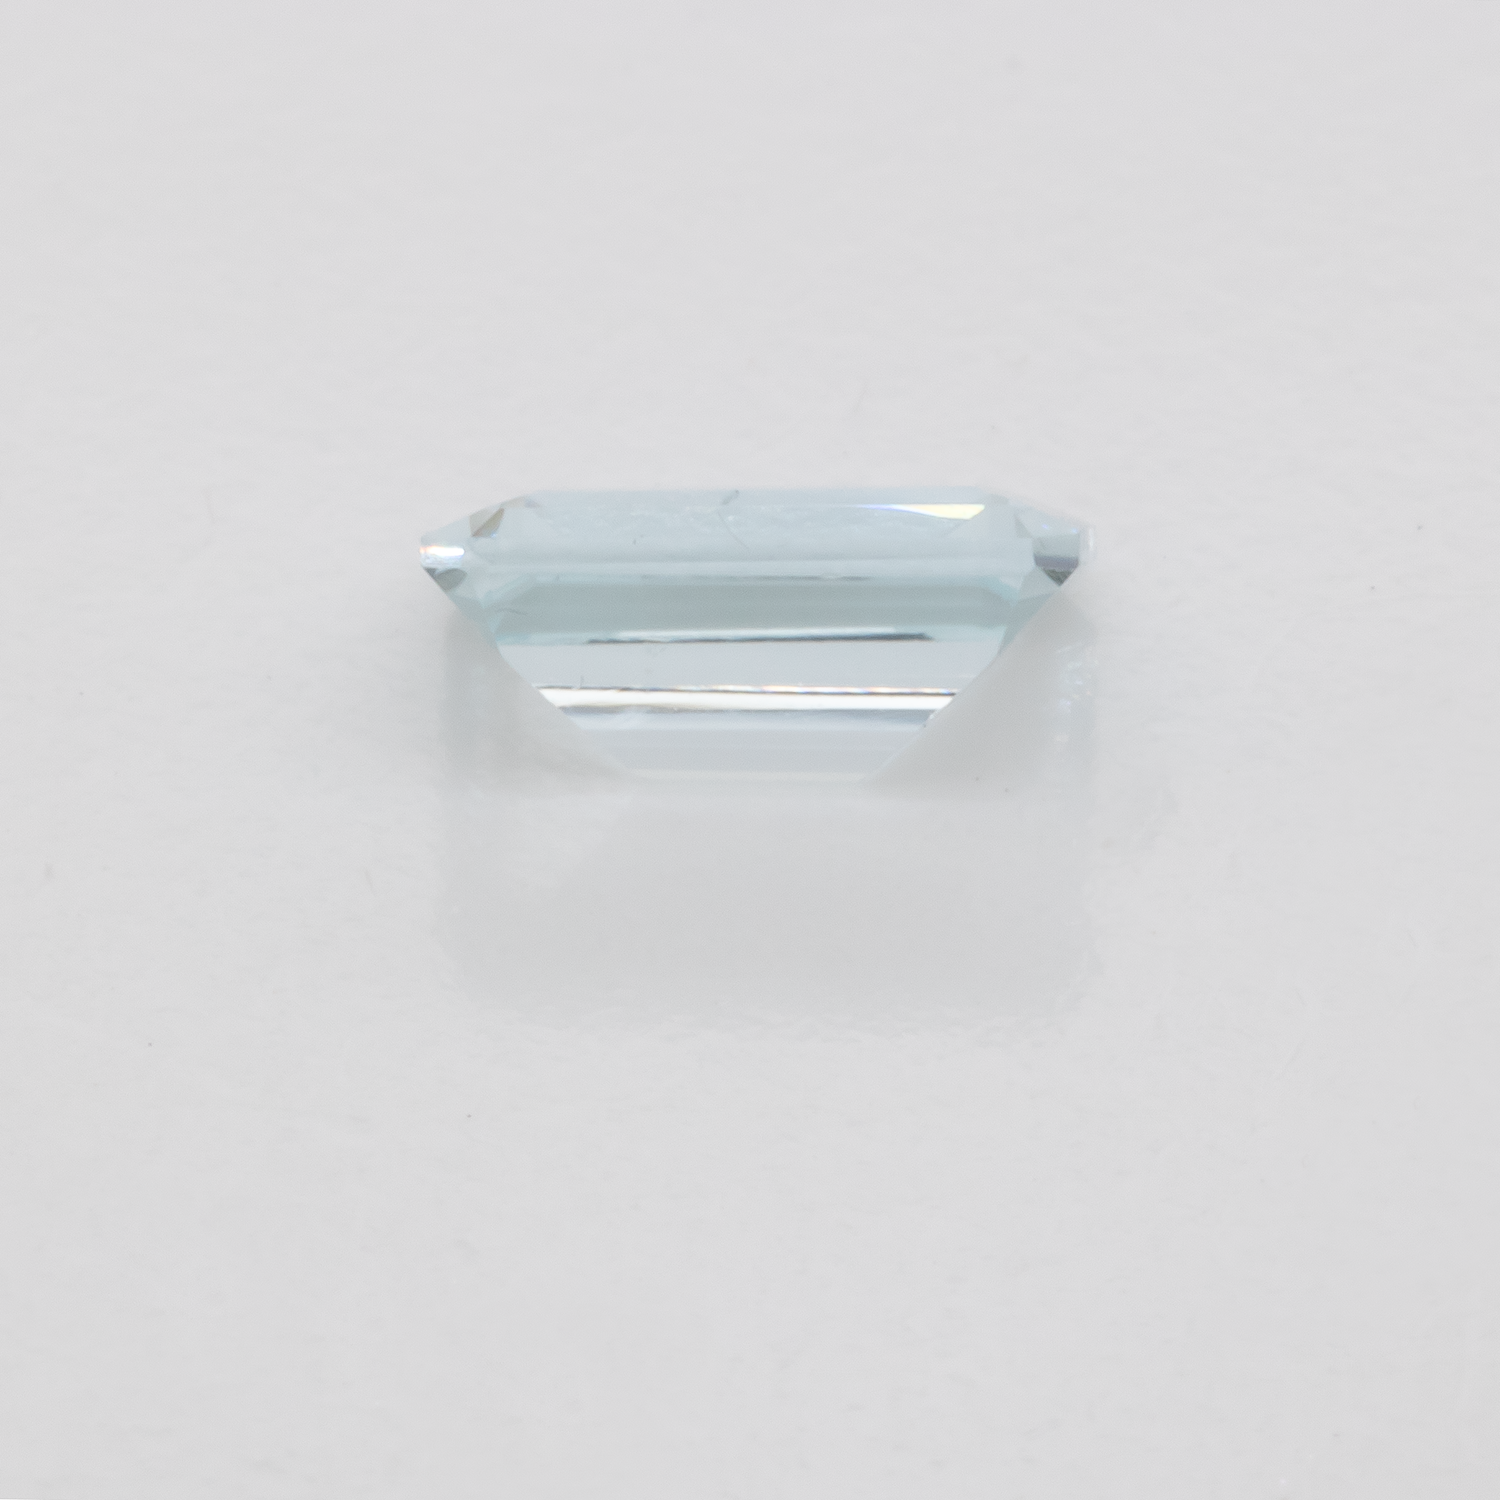 Aquamarin - A, achteck, 6x4 mm, 0.45 - 0.50 cts, Nr. A99049